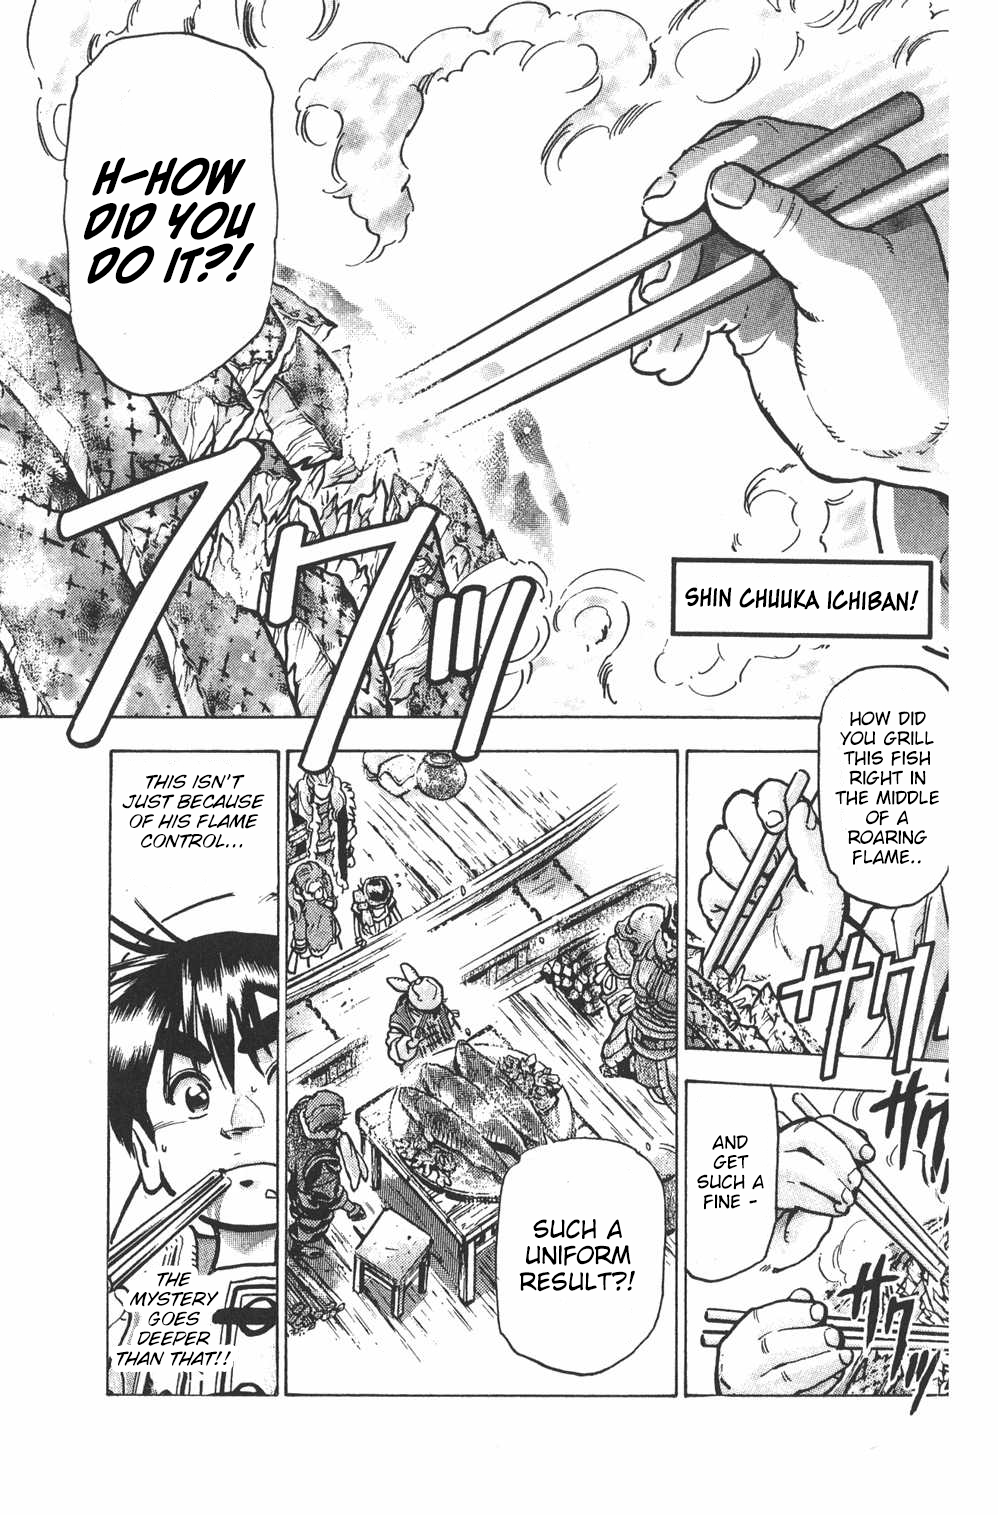 Shin Chuuka Ichiban! Vol. 8 Ch. 64 Man with a Mystery